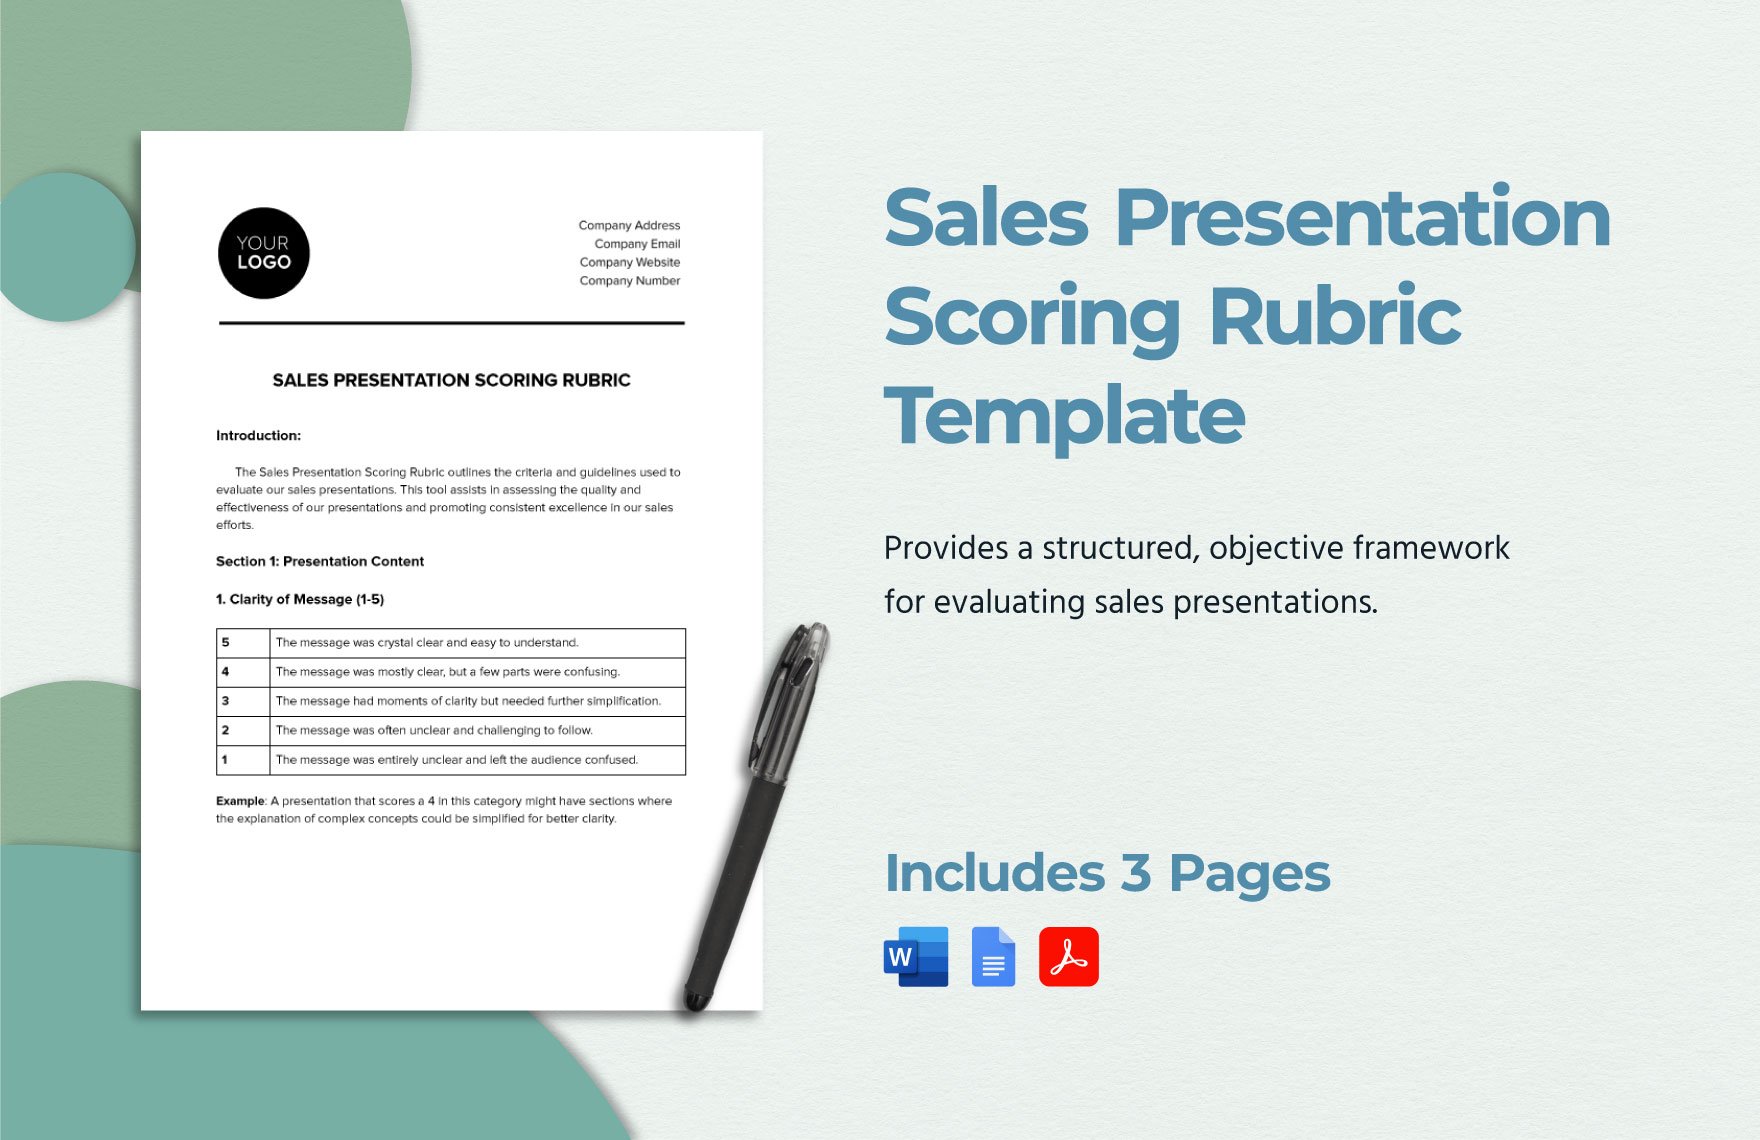 Free Sales Presentation Scoring Rubric Template in Word, Google Docs, PDF